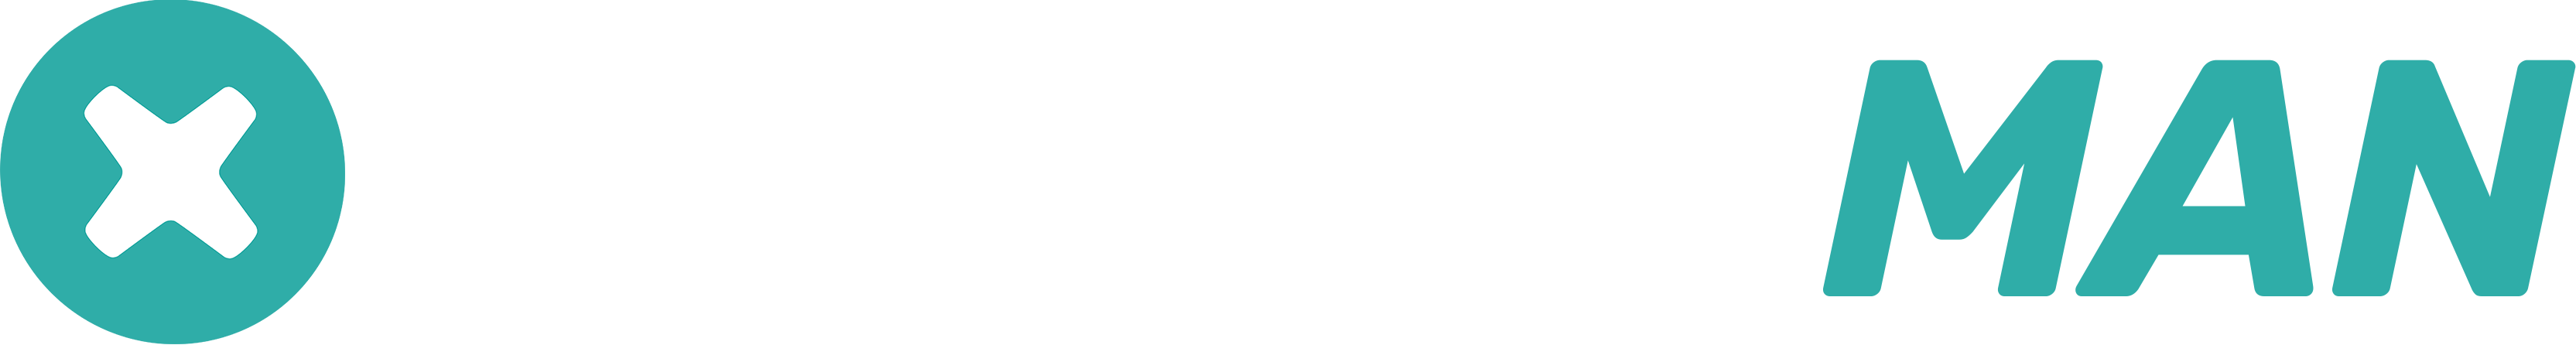 iscreenman logo